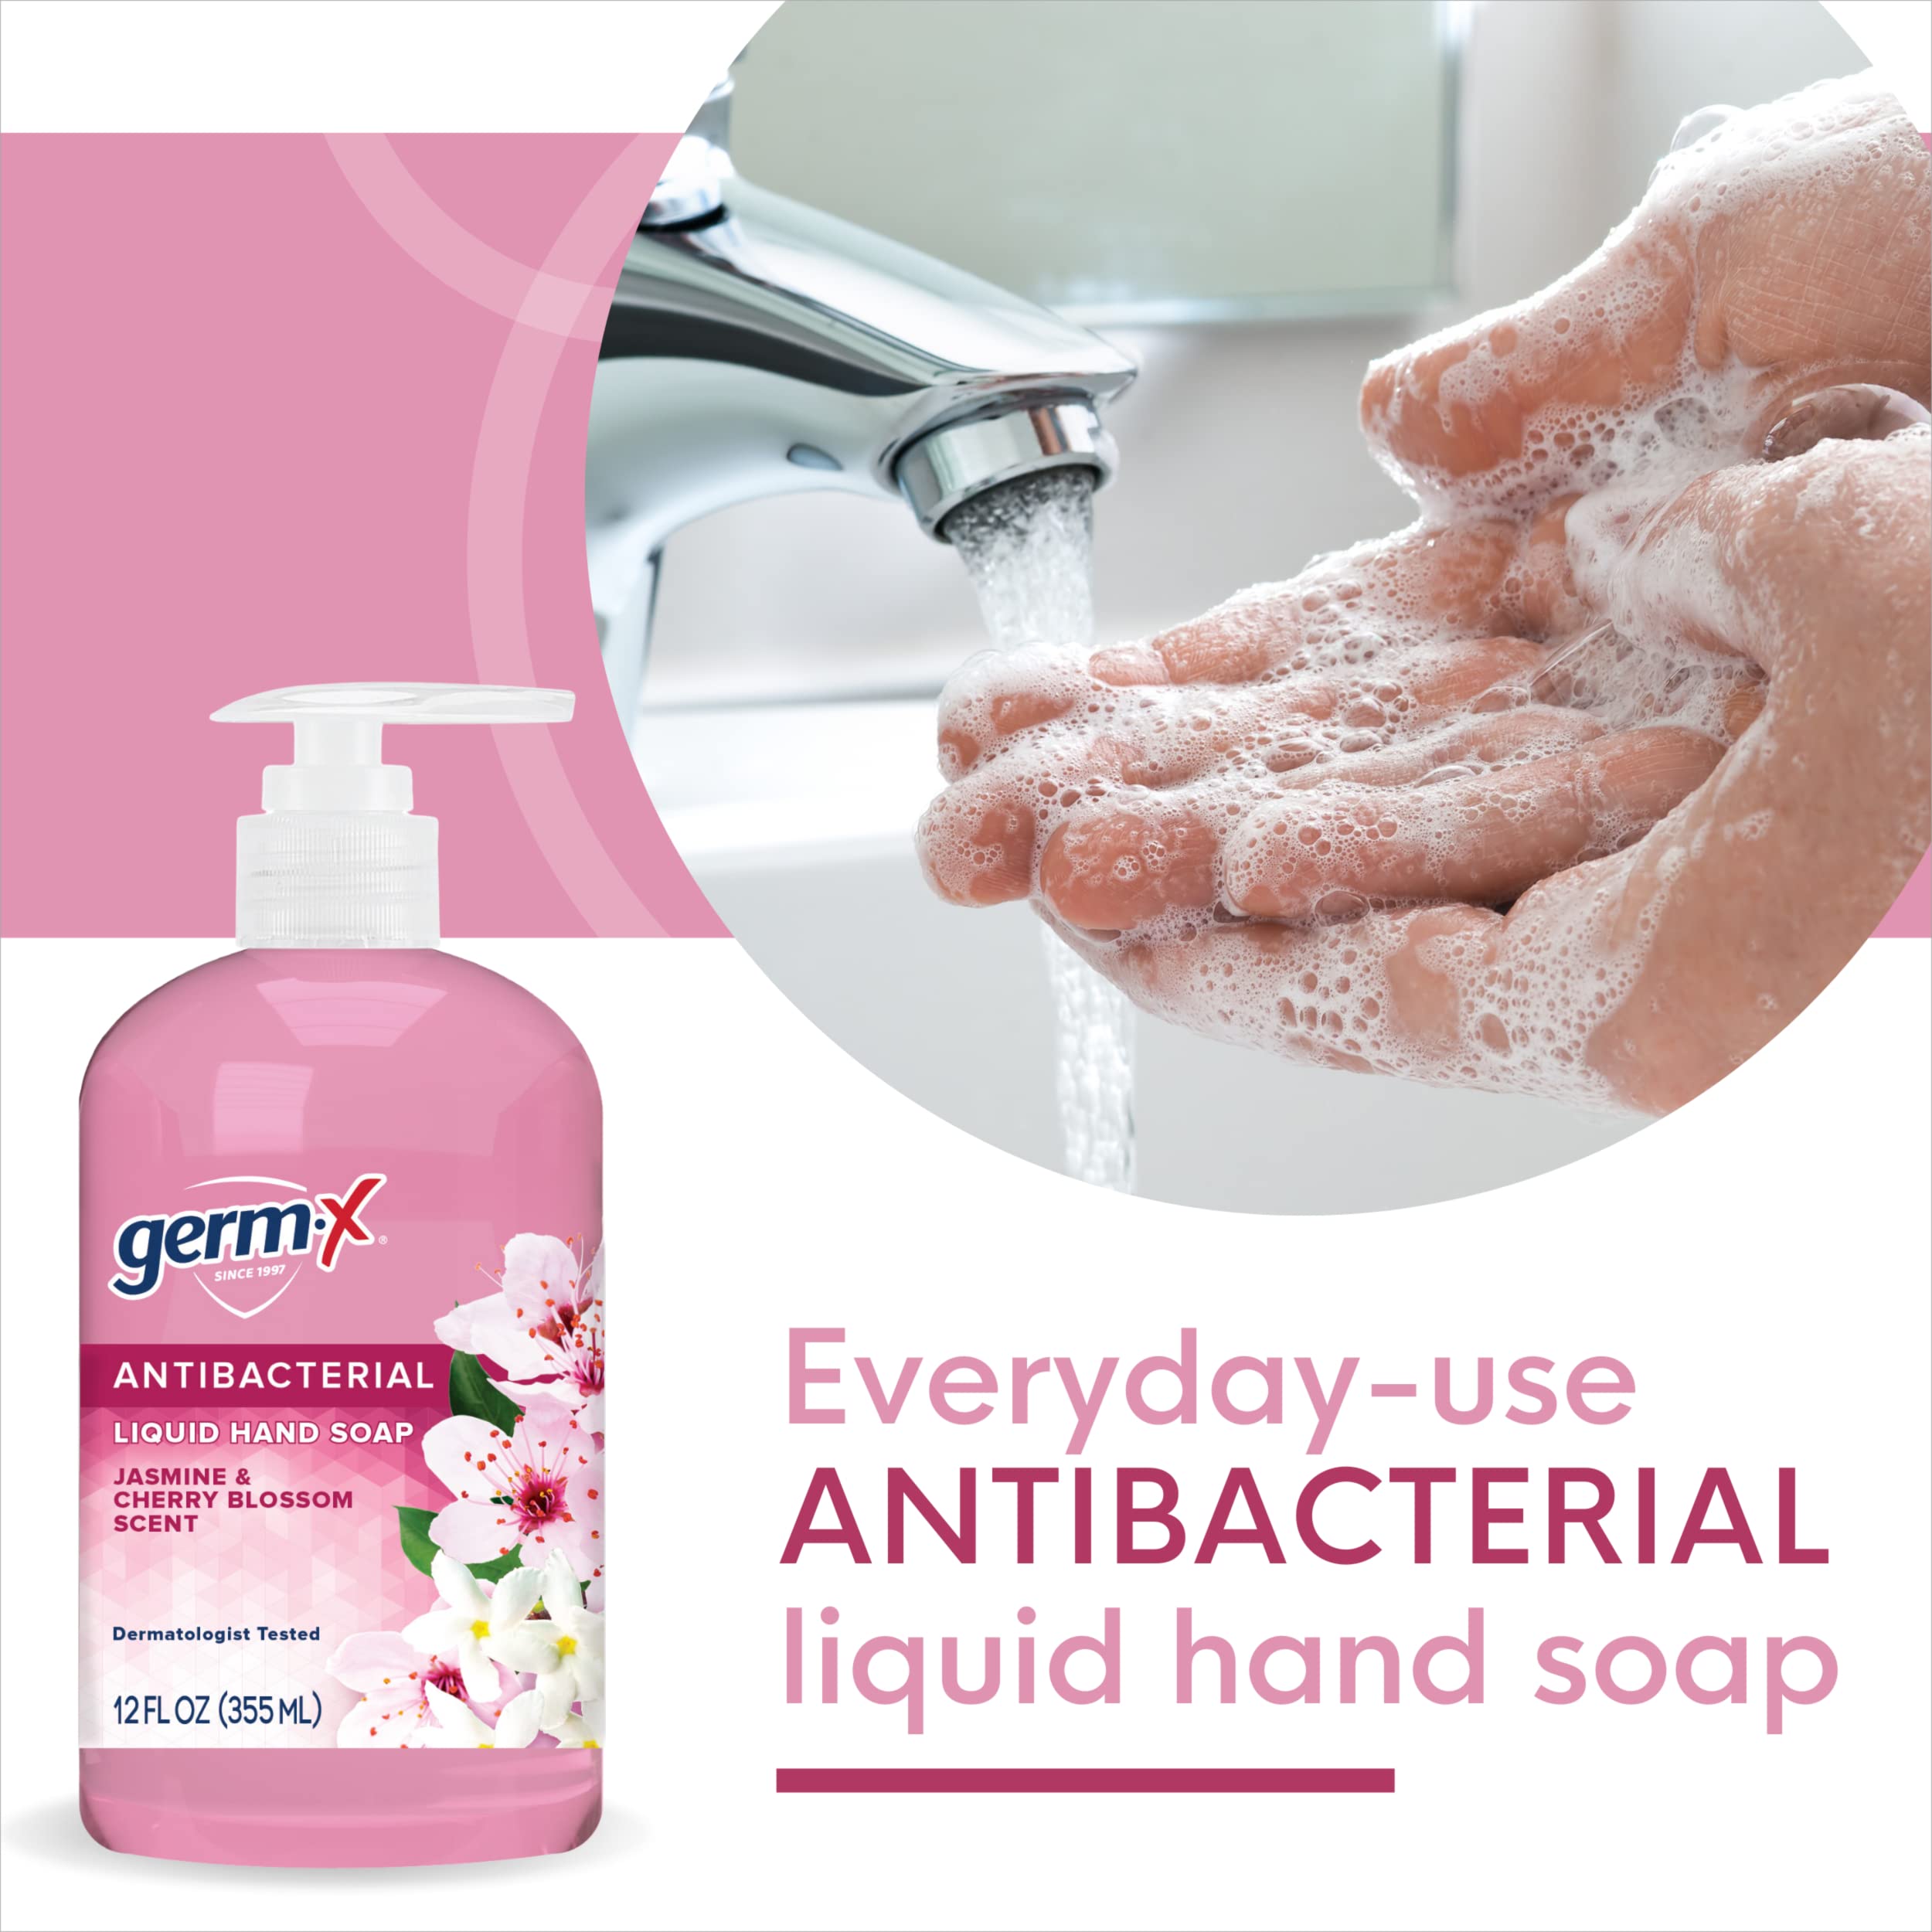 Germ-x Antibacterial Hand Soap, Moisturizing Liquid Hand Wash for Kitchen or Bathroom, pH Balanced & Dermatologist Tested, Jasmine & Cherry Blossom, 12 oz Pump Bottle (Pack of 4)